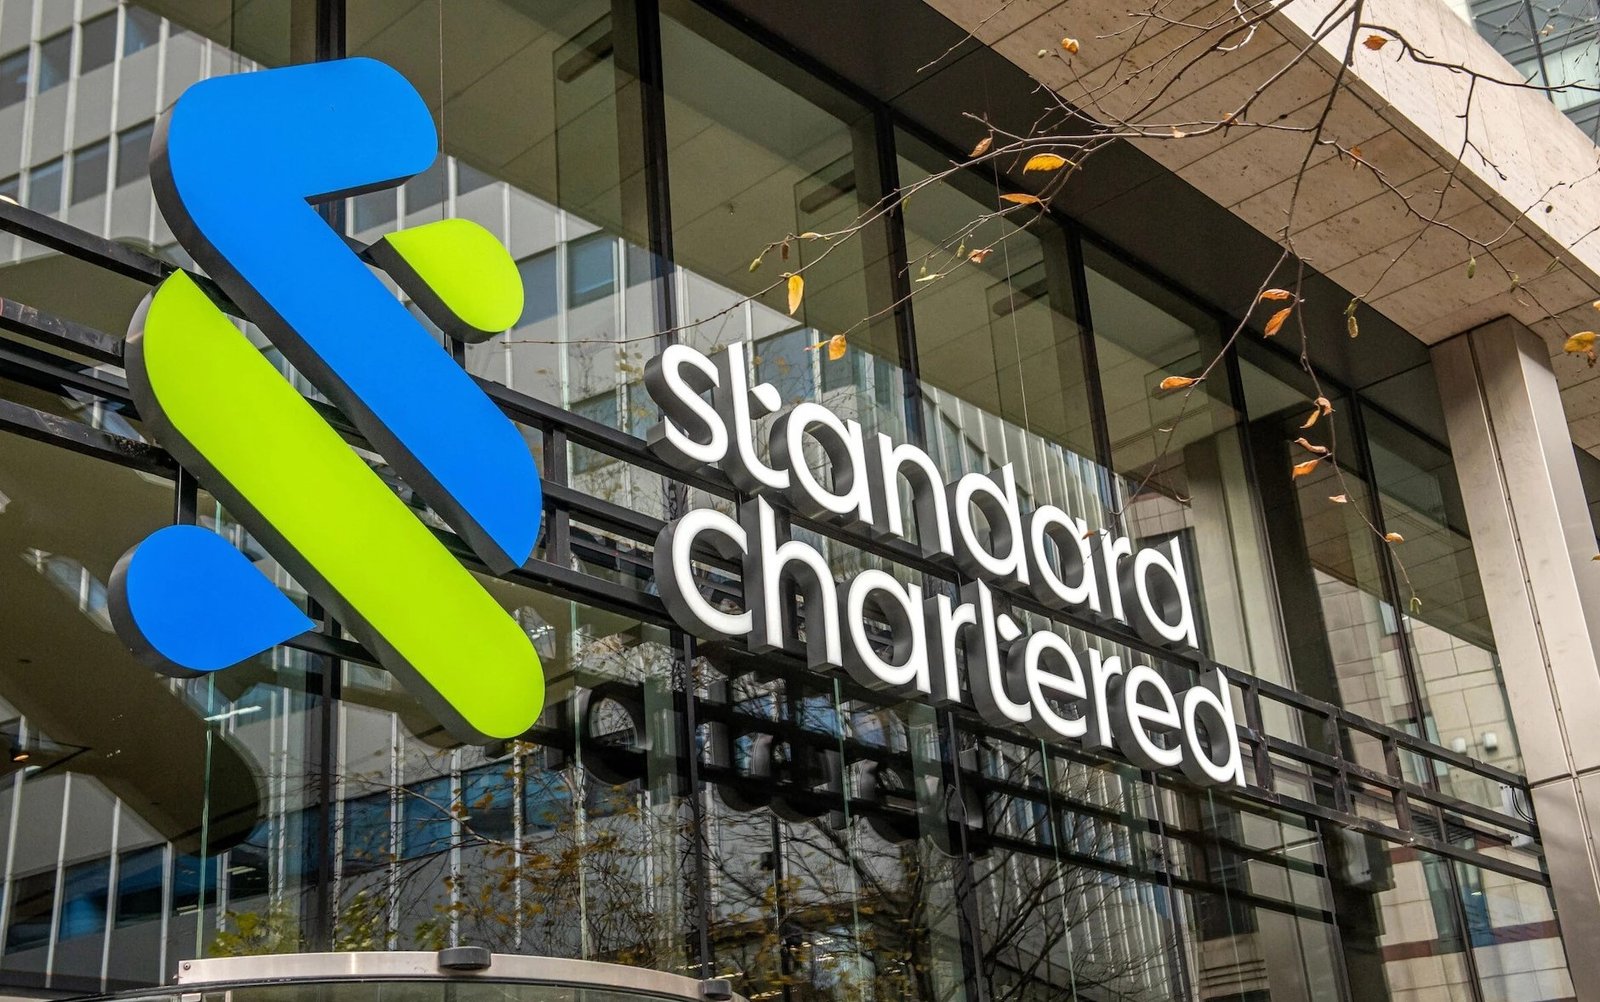 Standard Chartered Bank Marketing Mix